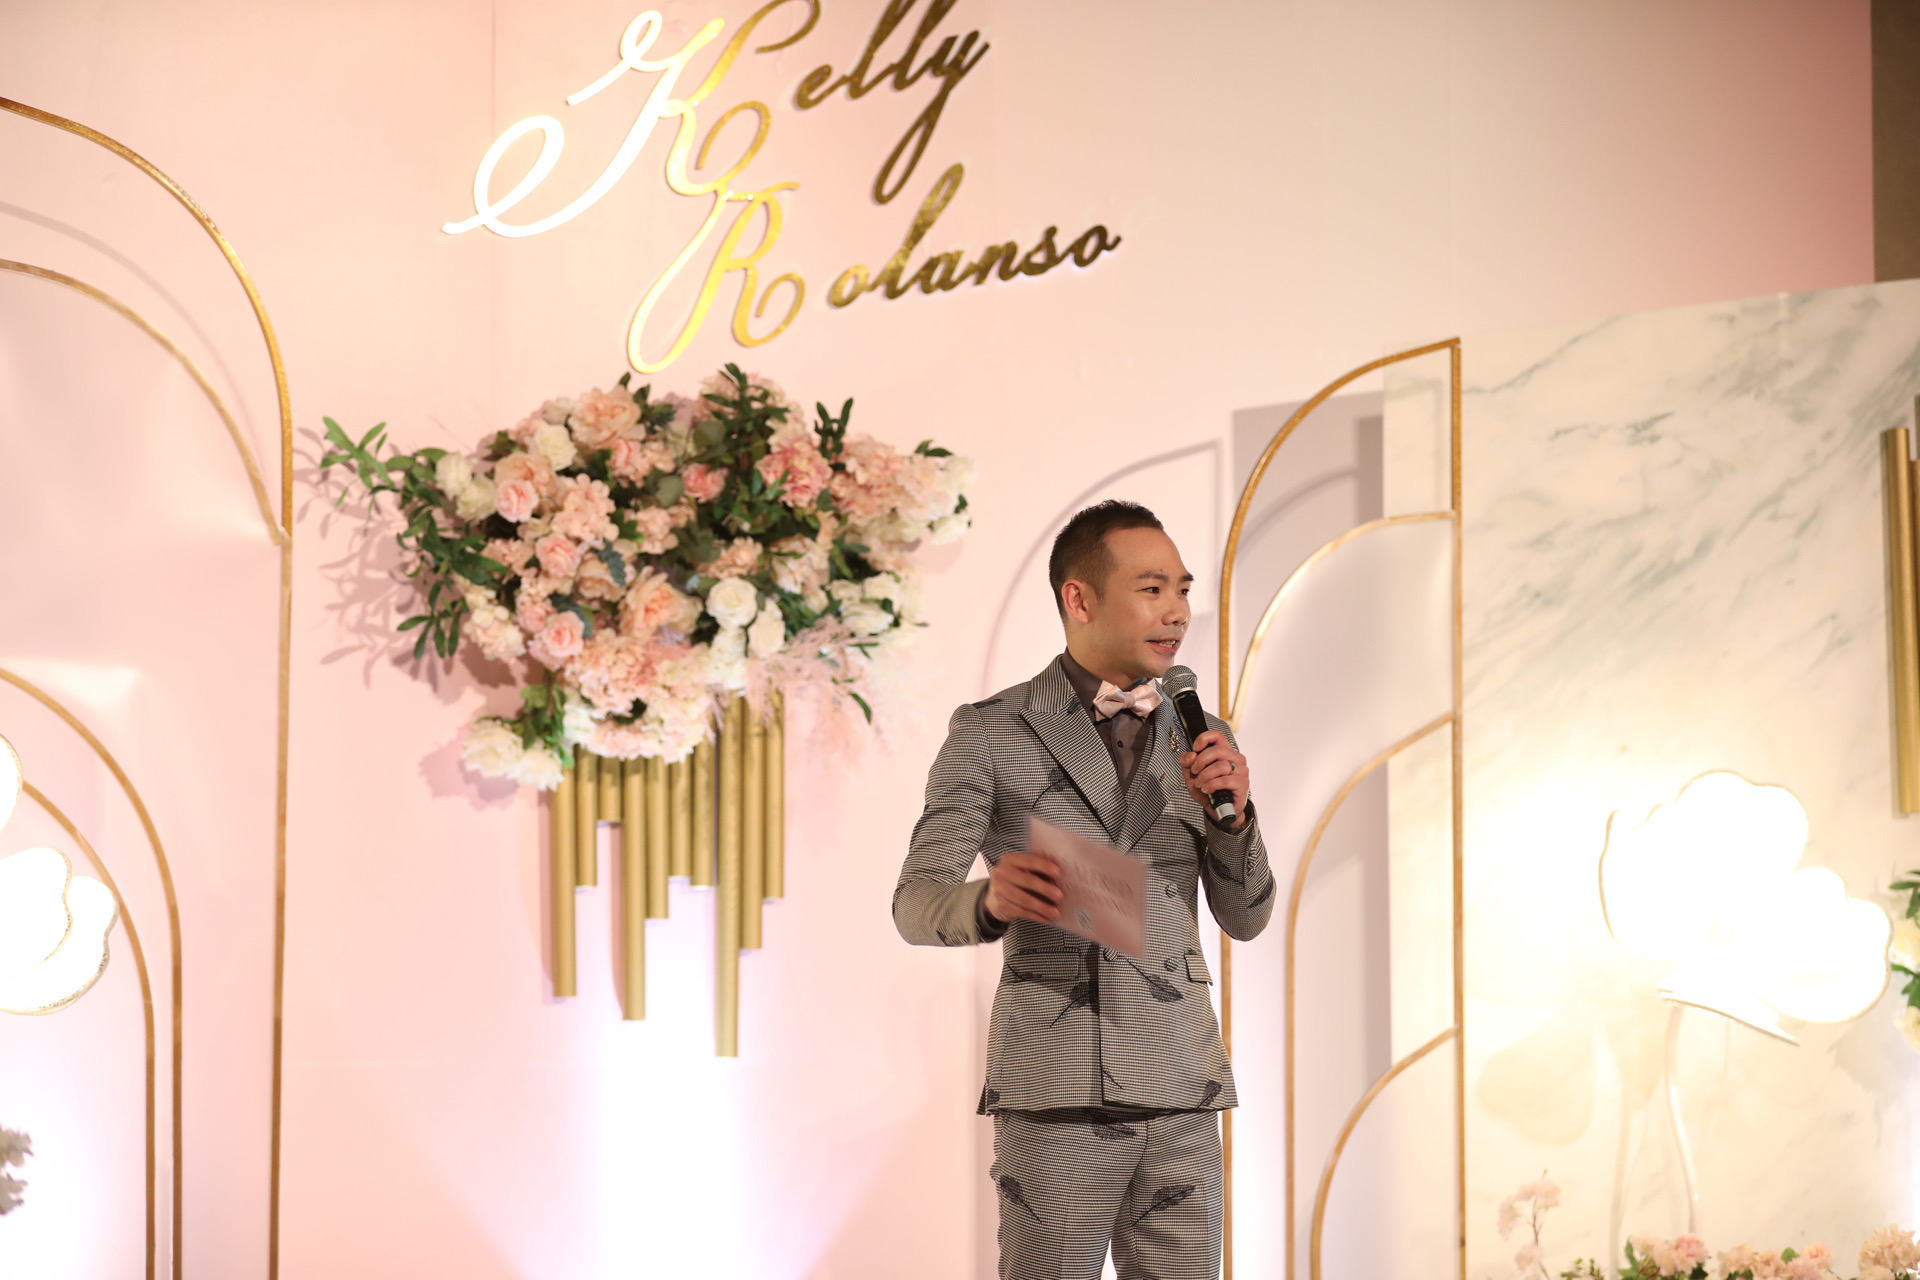  MC Alfred司儀工作紀錄: 20200103 Wedding MC 澳門全職婚禮統籌司儀 Alfred @ 澳門麗思卡爾頓酒店 The Ritz-Carlton Macau